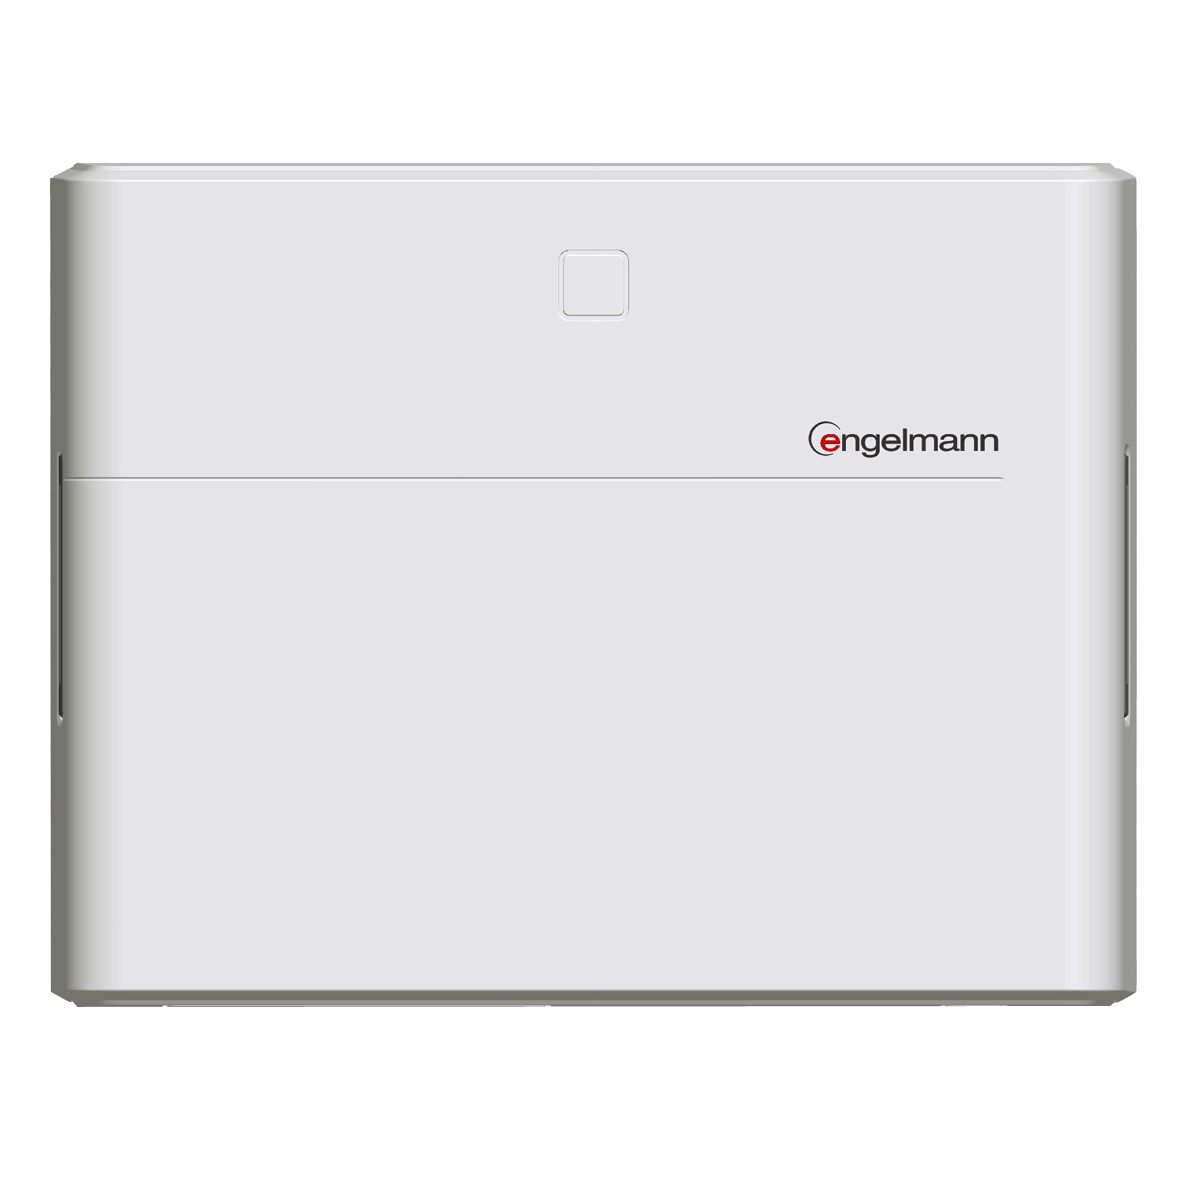 ENGELMANN Gateway GPRS Вспомогательное оборудование